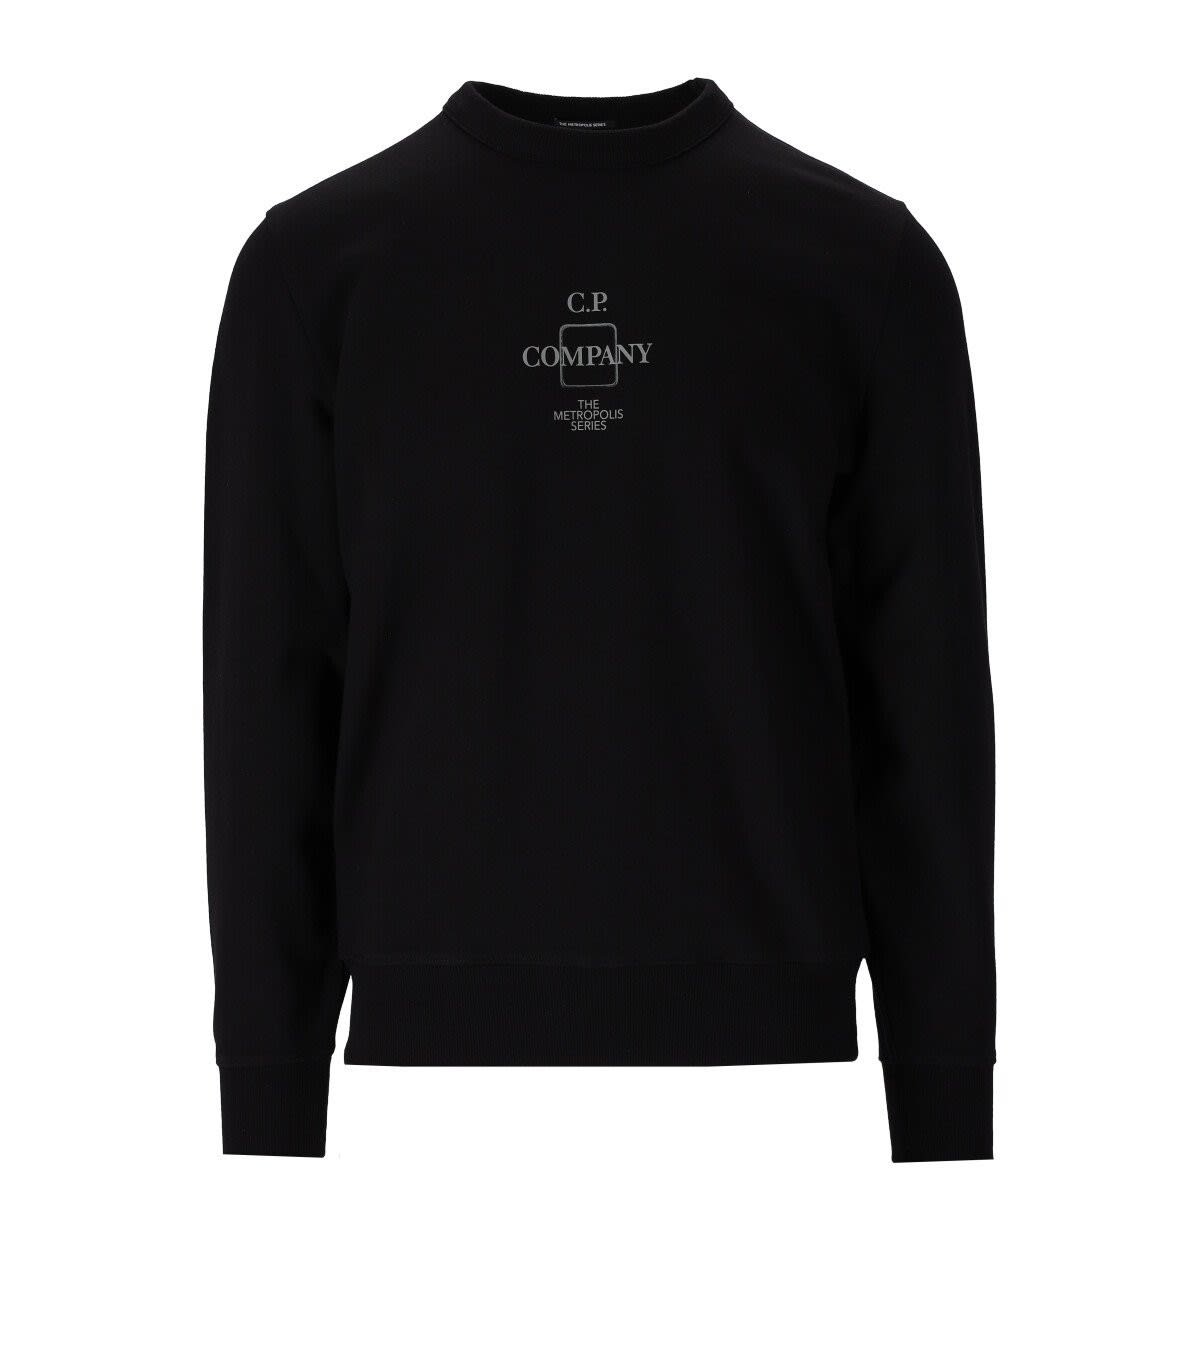 C.p. Company The Metropolis Series Black Sweatshirt